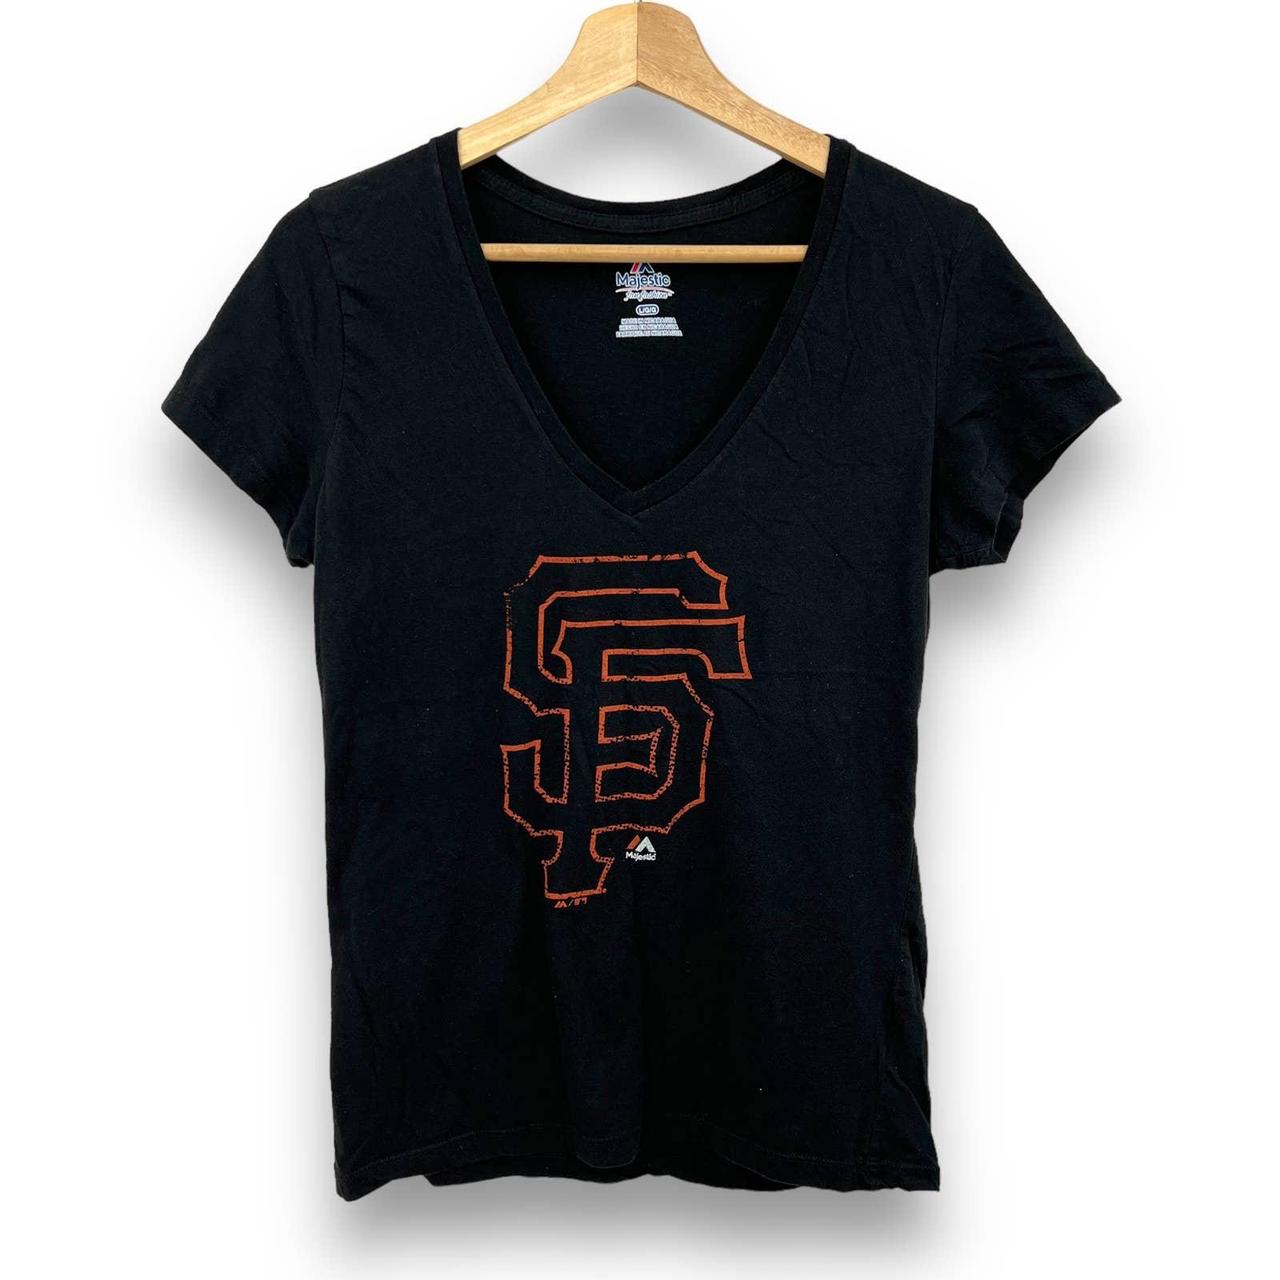 San francisco giants baseball majestic t shirt in - Depop